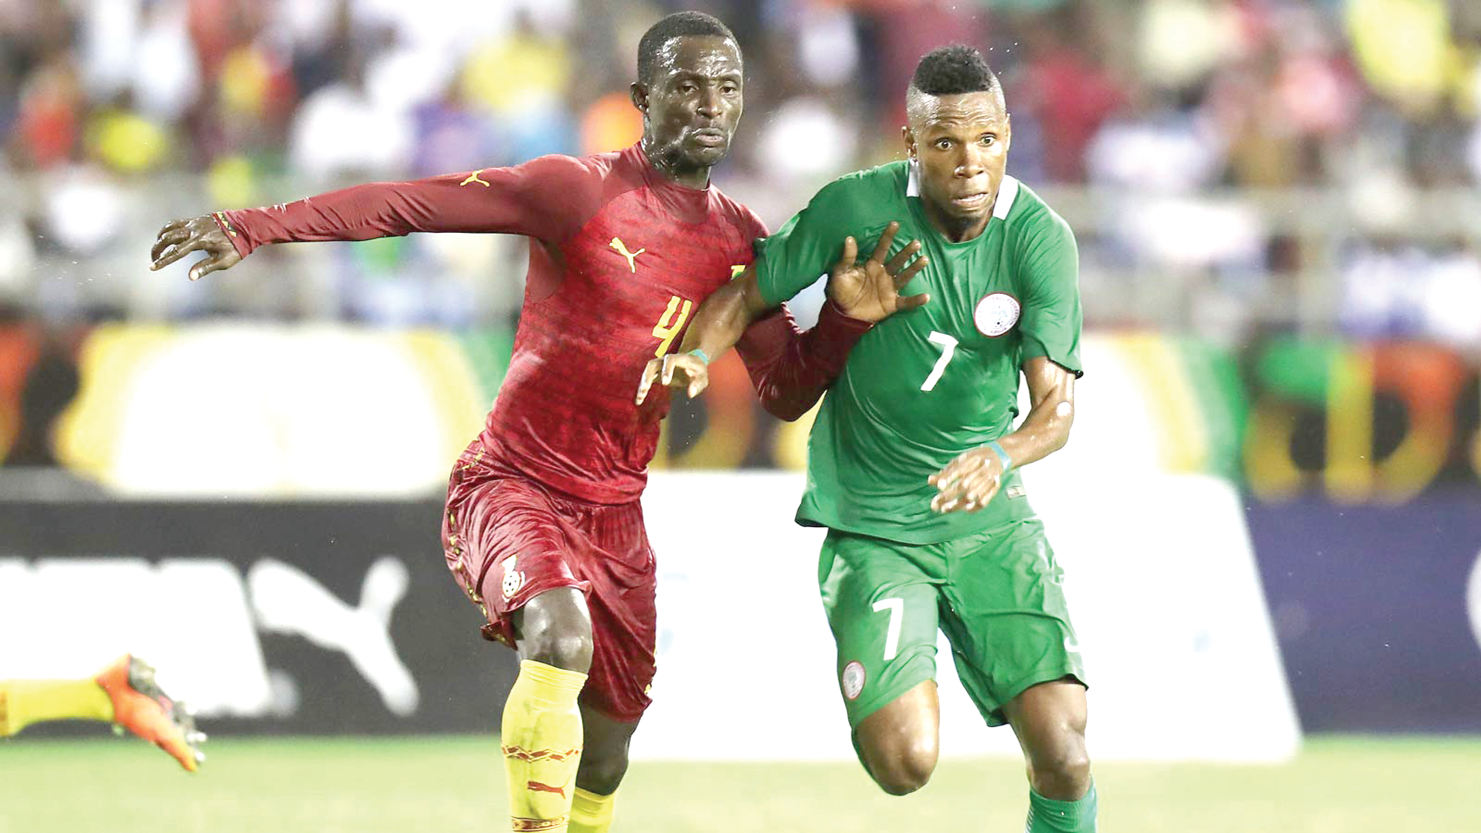  Ghana defender Emmanuel Ampiah in a tussle with Nigeria forward John Ubony Friday